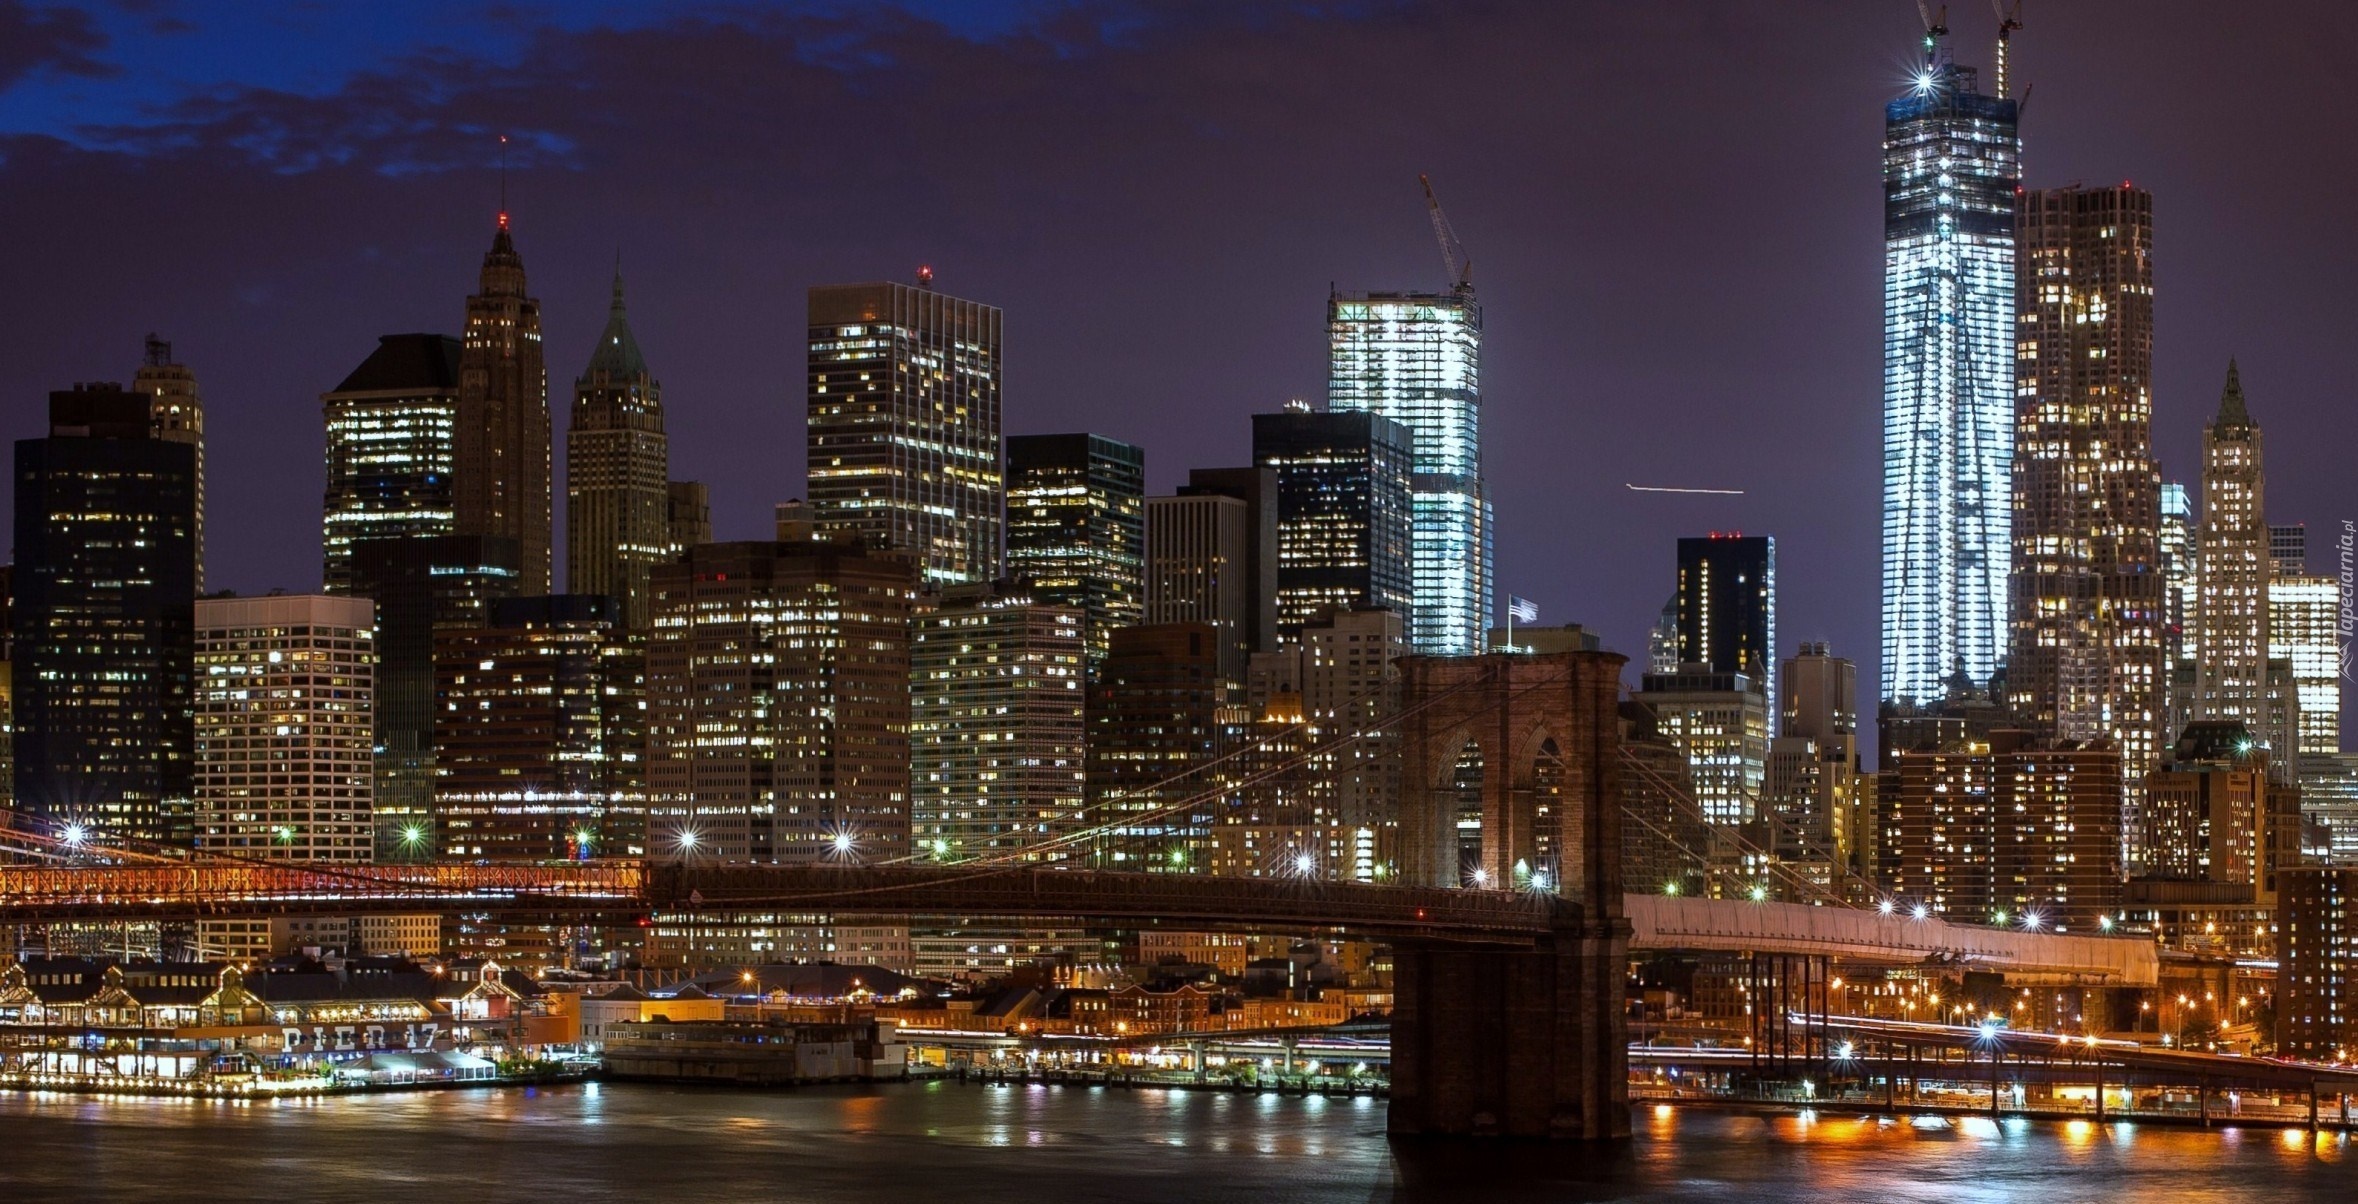 Drapacze chmur, Brooklyn Bridge, Manhattan nocą